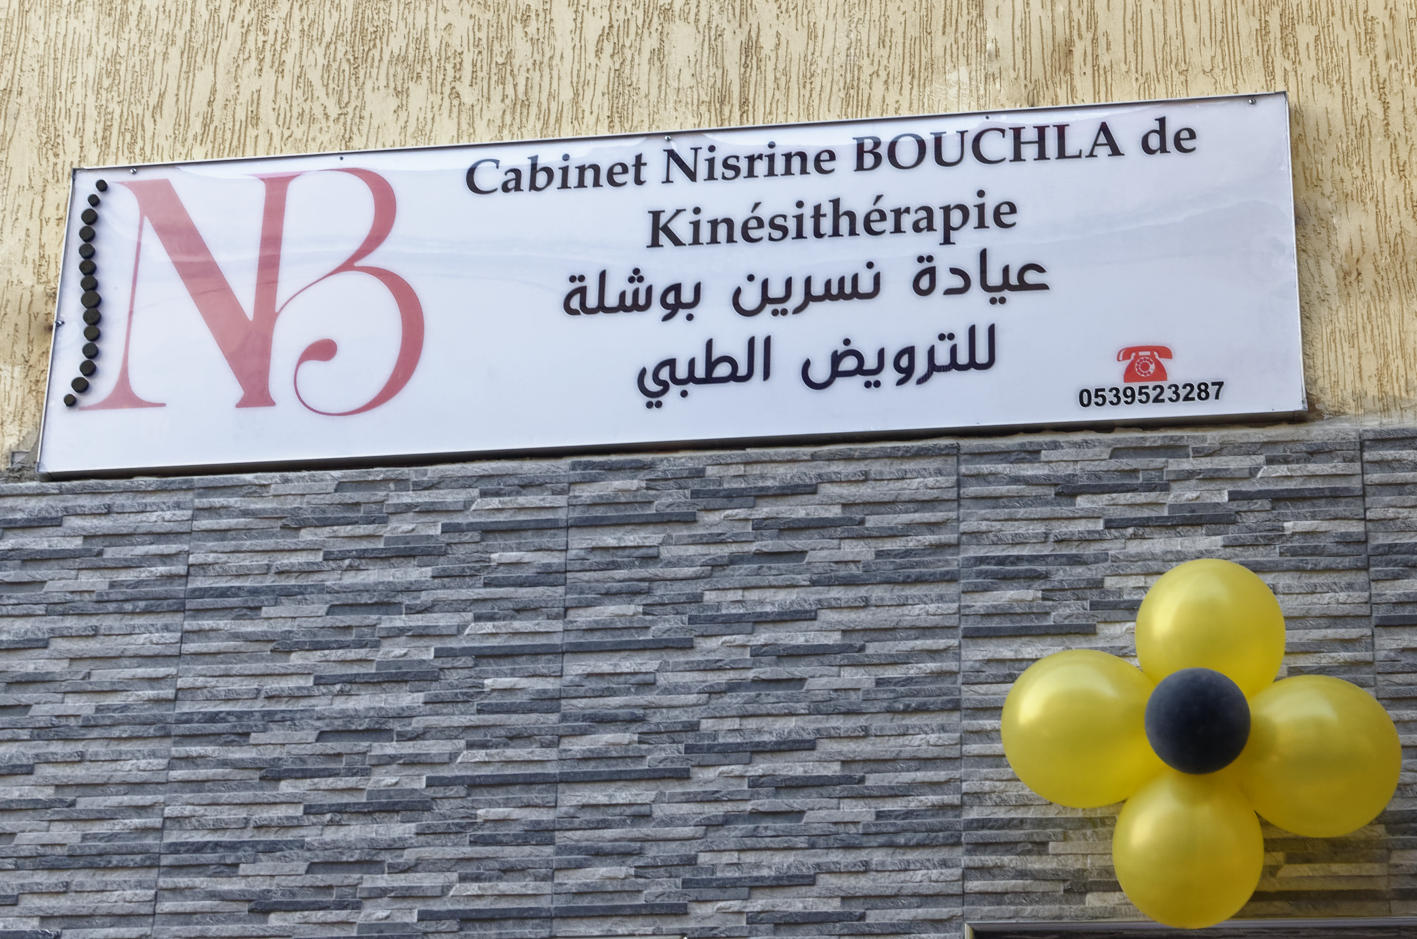 Cabinet Nisrine Bouchla de Kinésithérapie